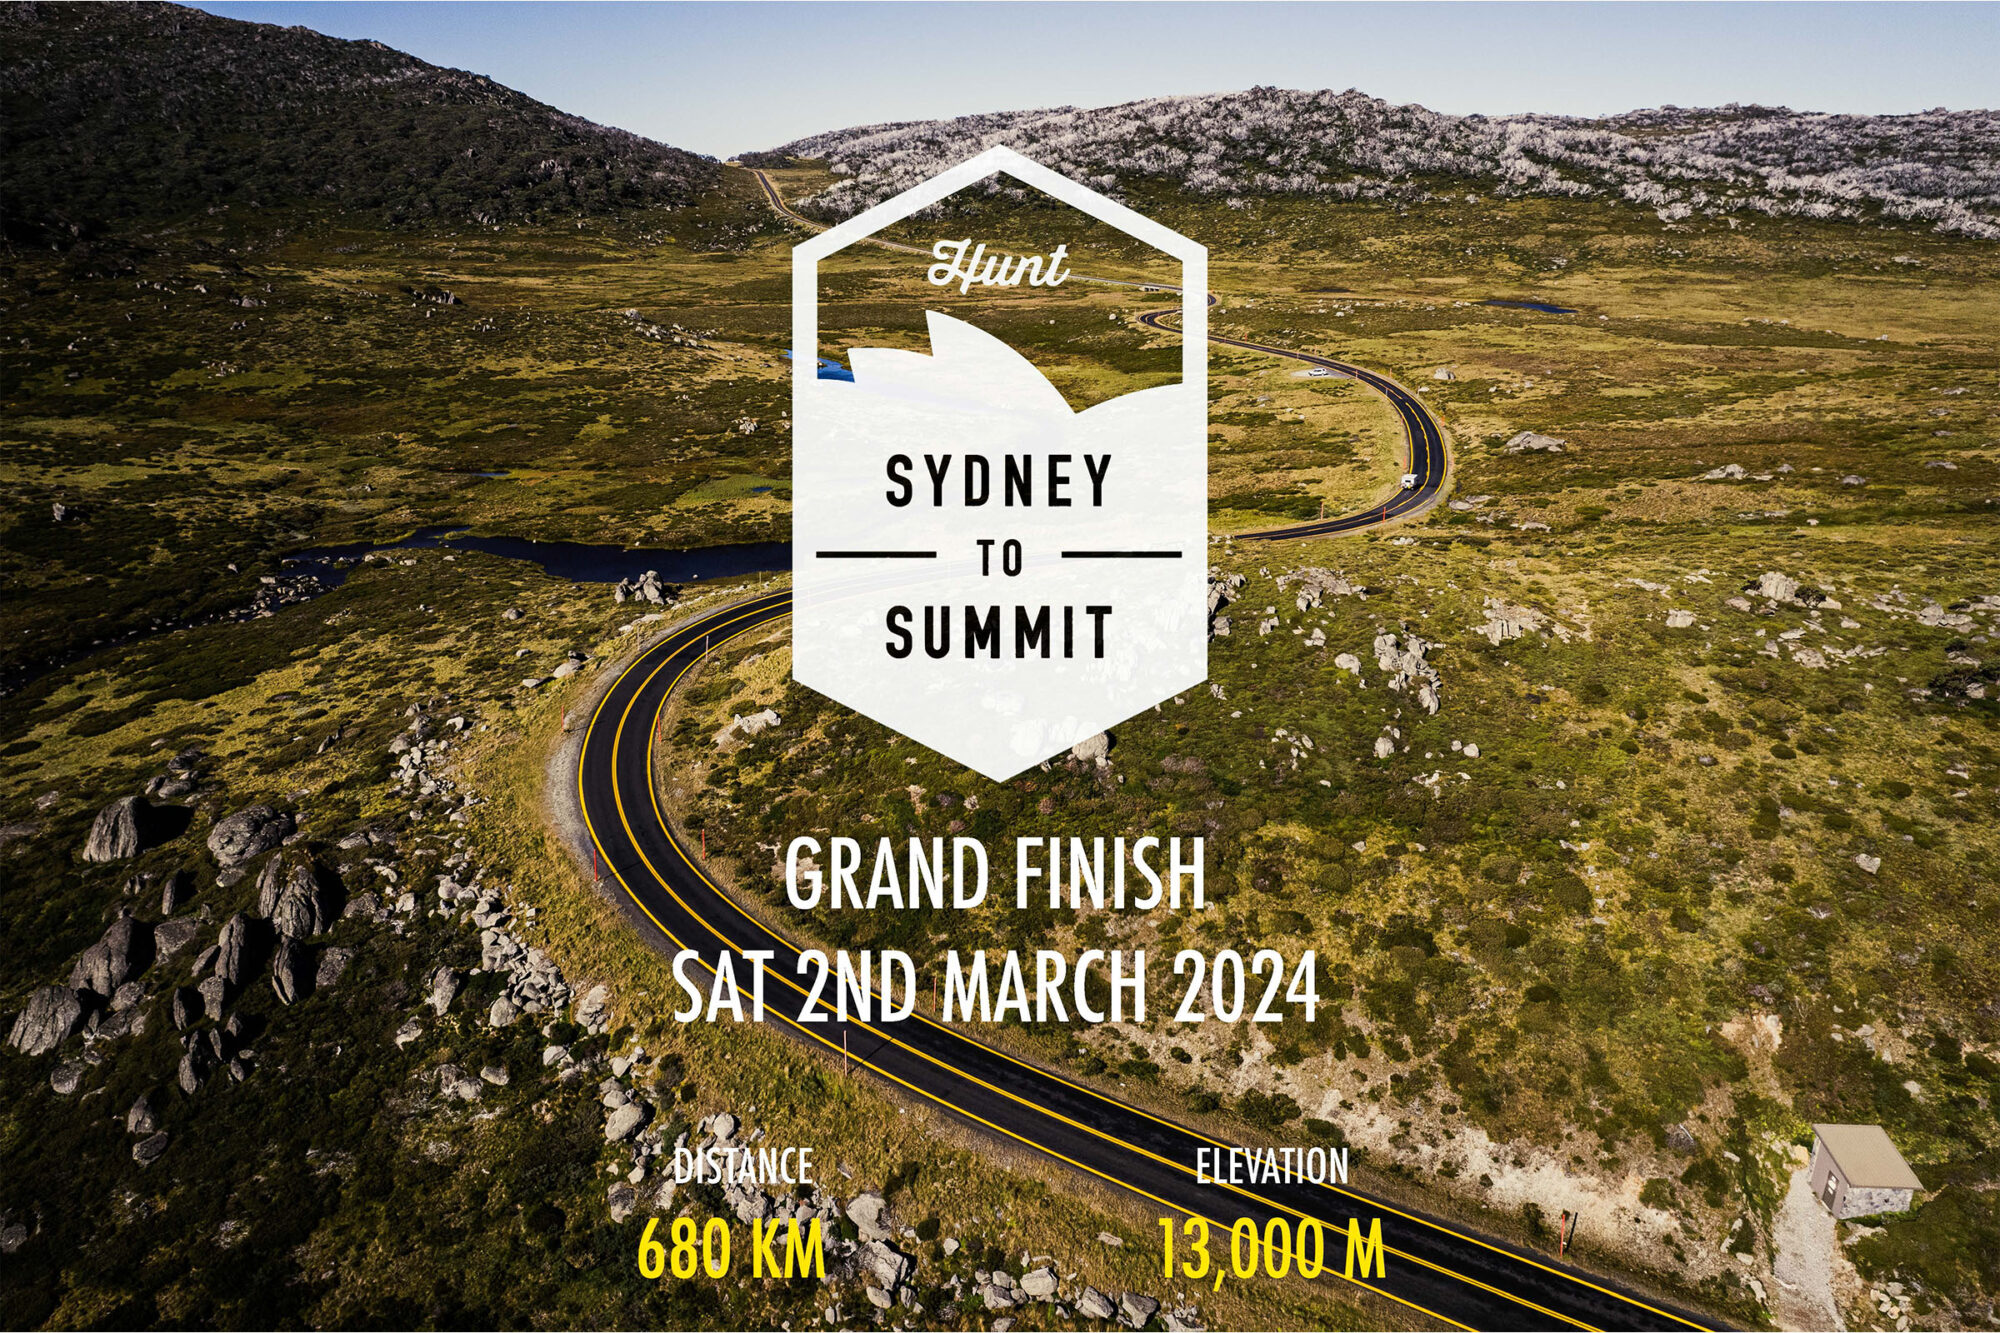 Sydney to summit 2024